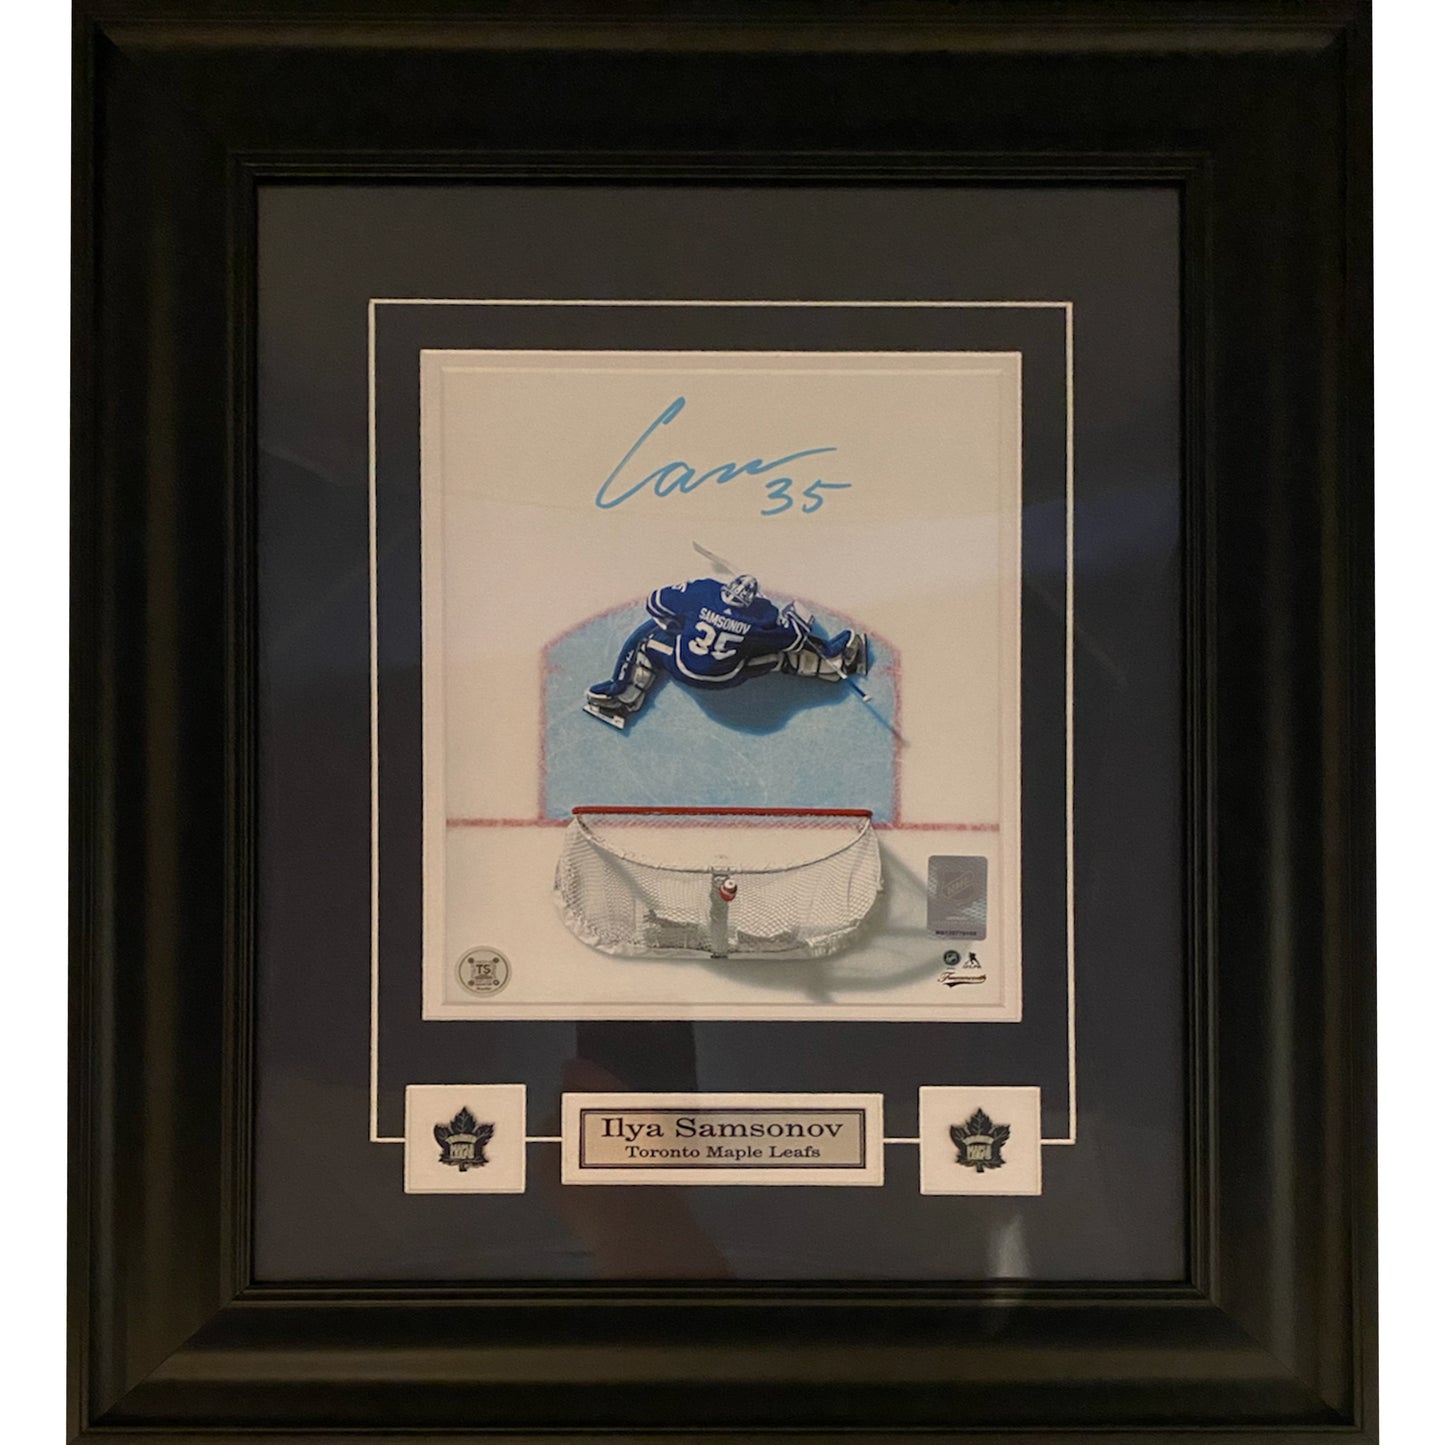 Ilya Samsonov Autographed Toronto Maple Leafs Aerial View Framed 8x10 Photo